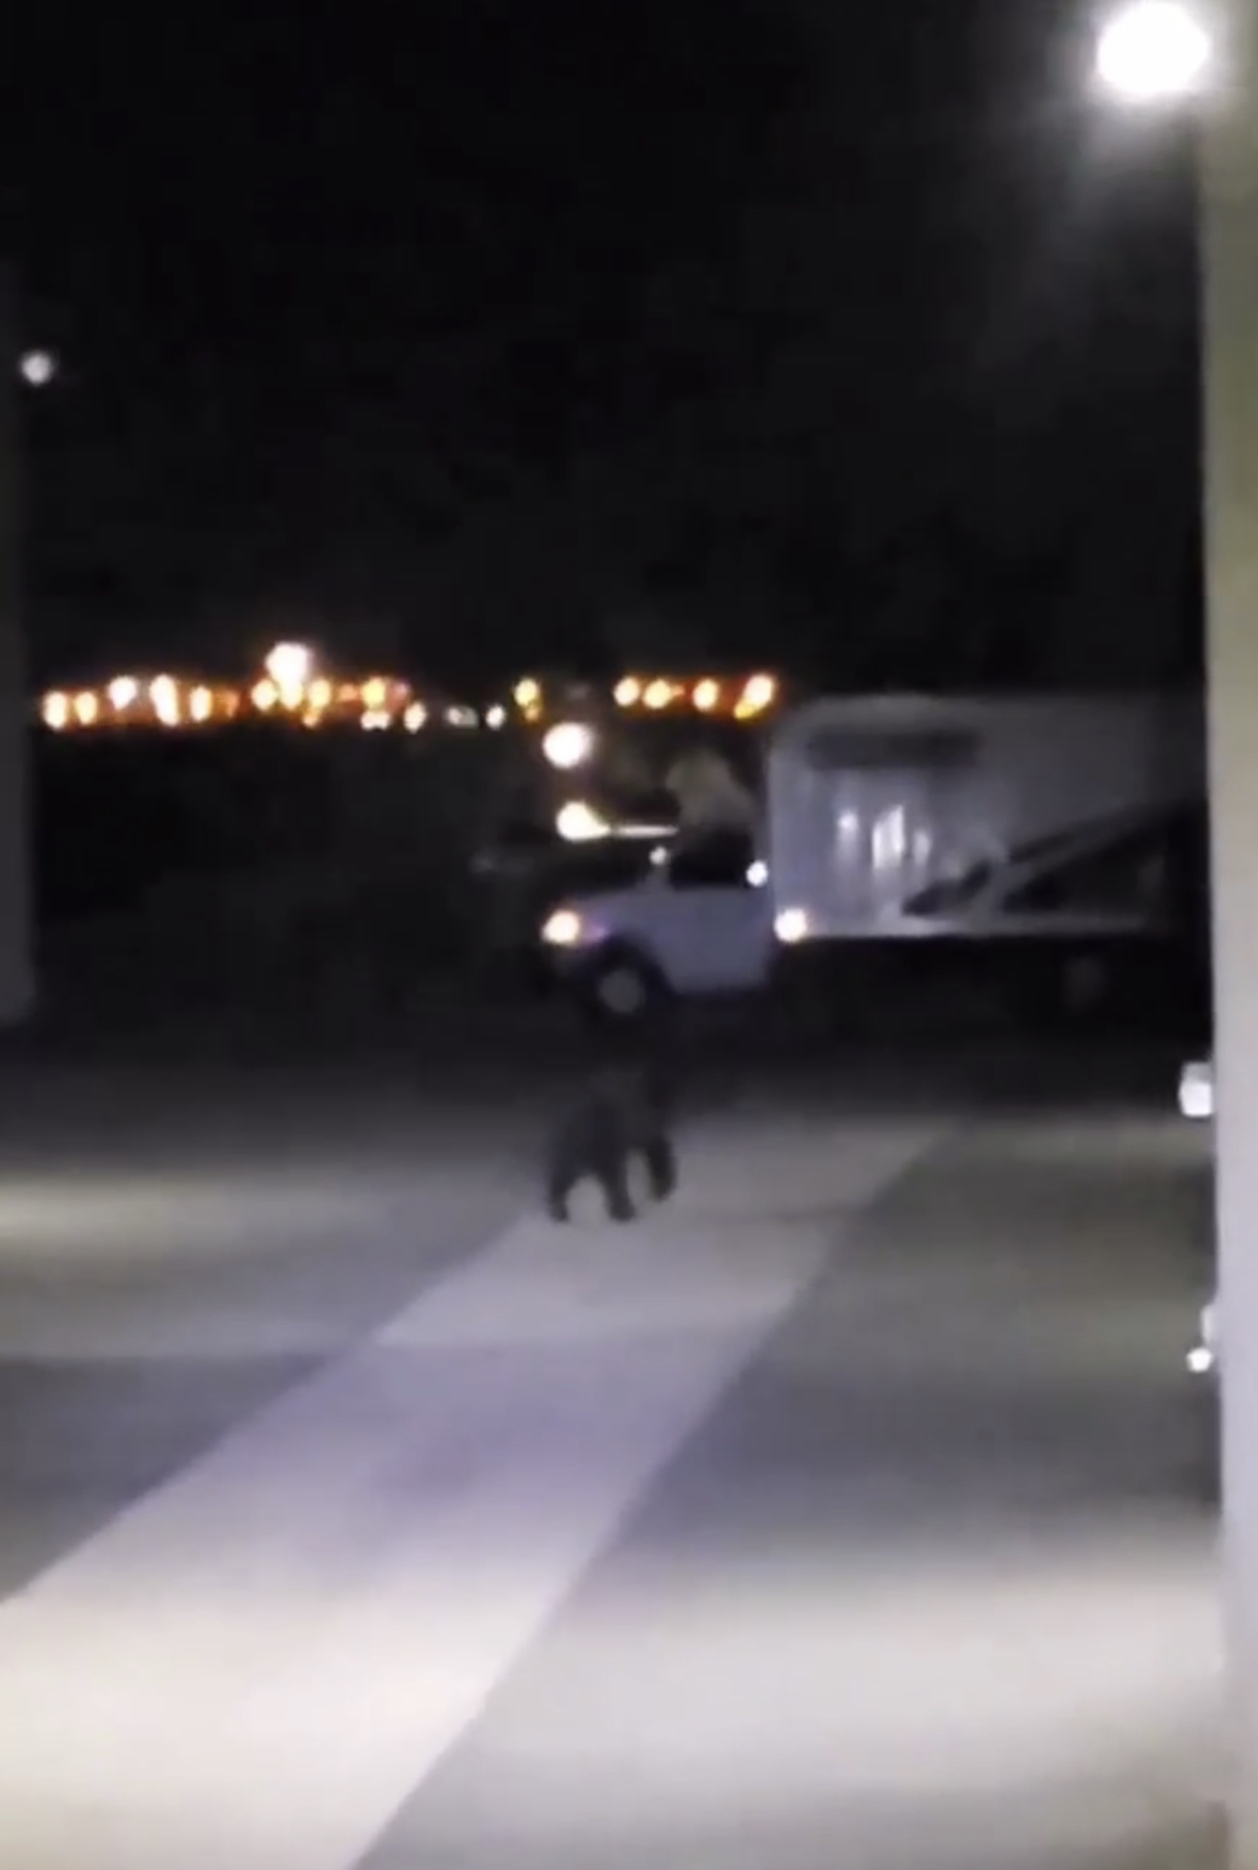 Bear sighting (video)